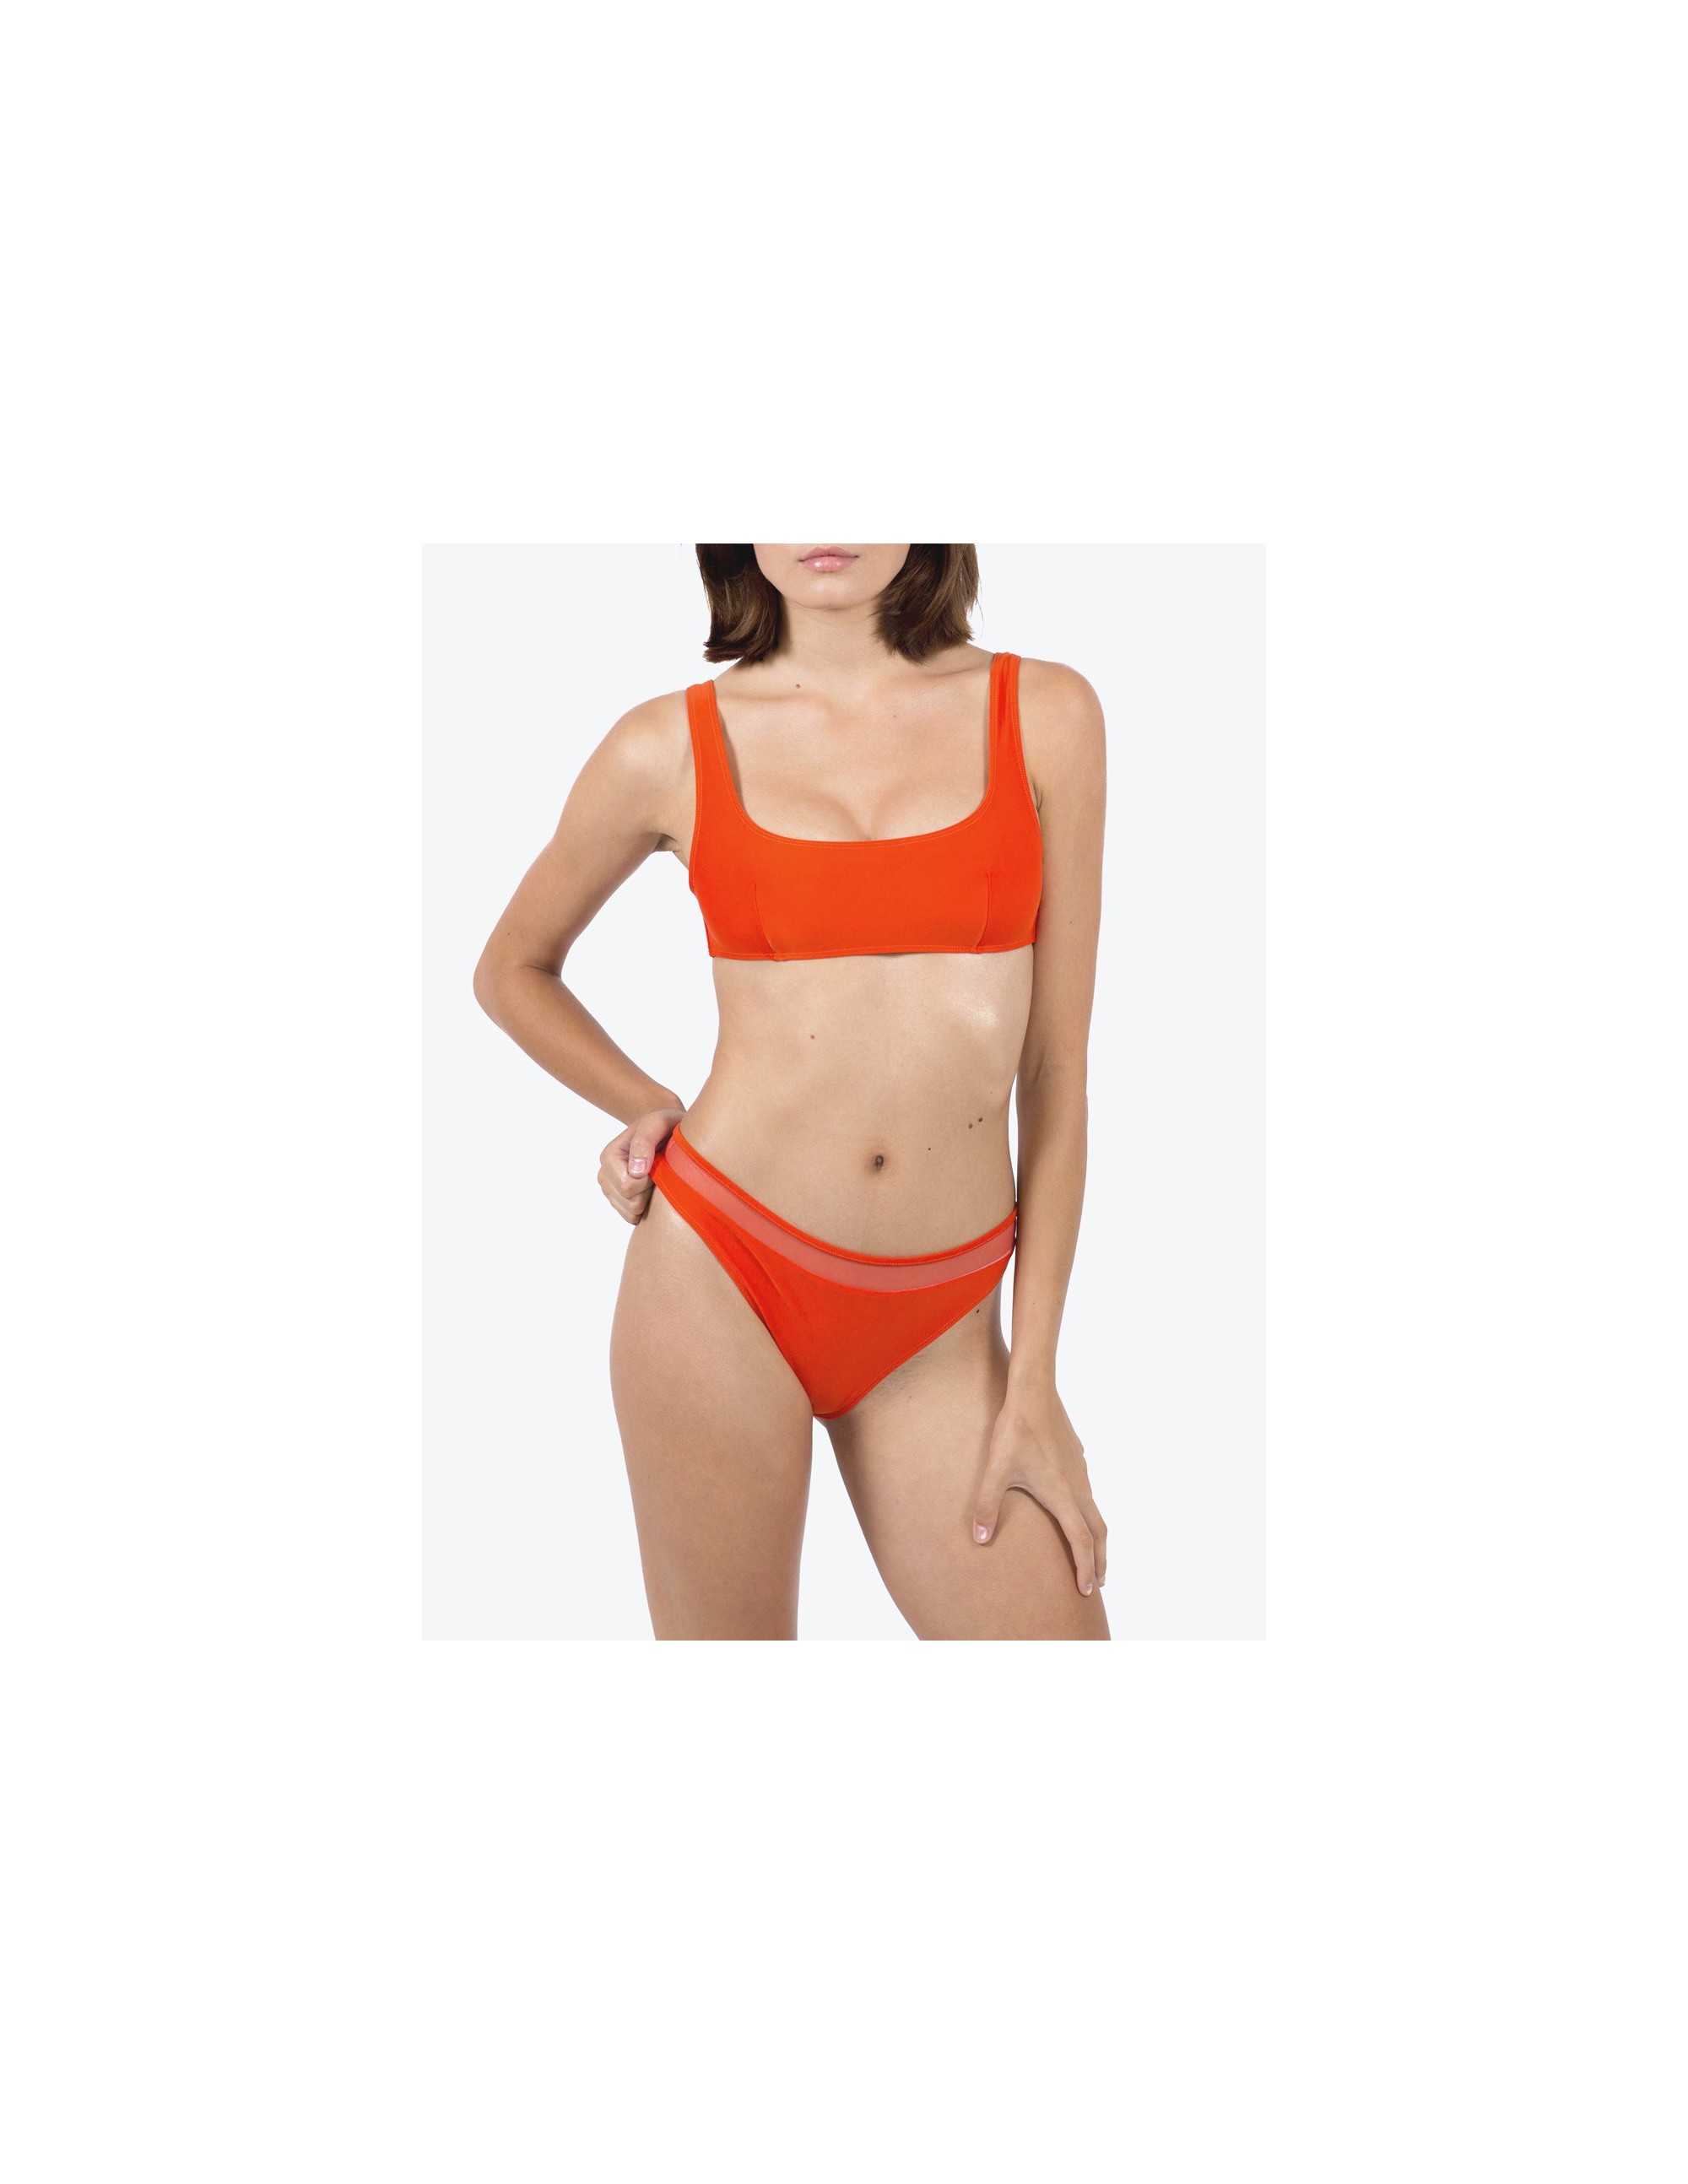 JAZ bikini bottom - CHARACTER RED